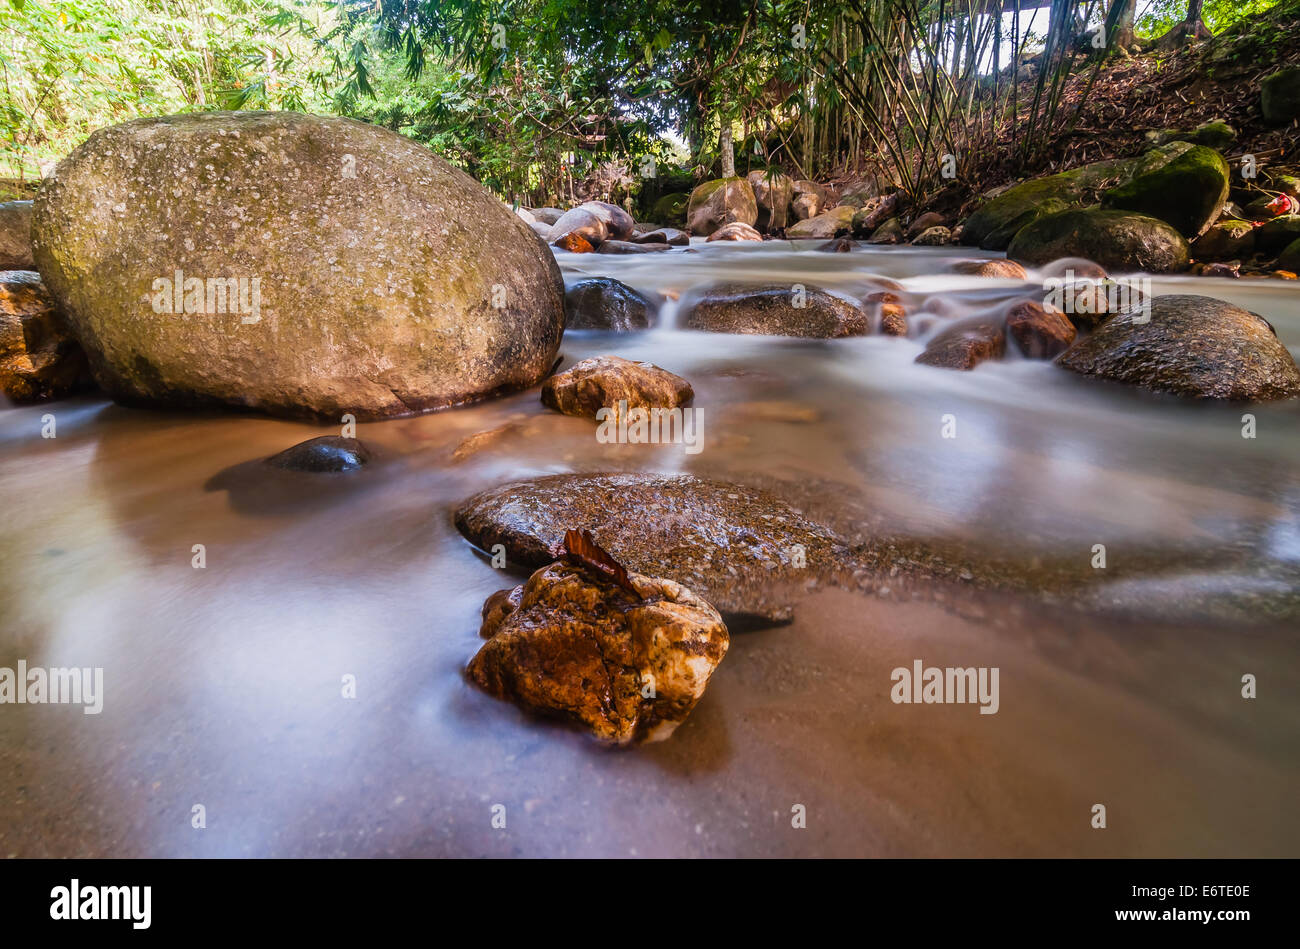 Congkak river flow Stock Photo